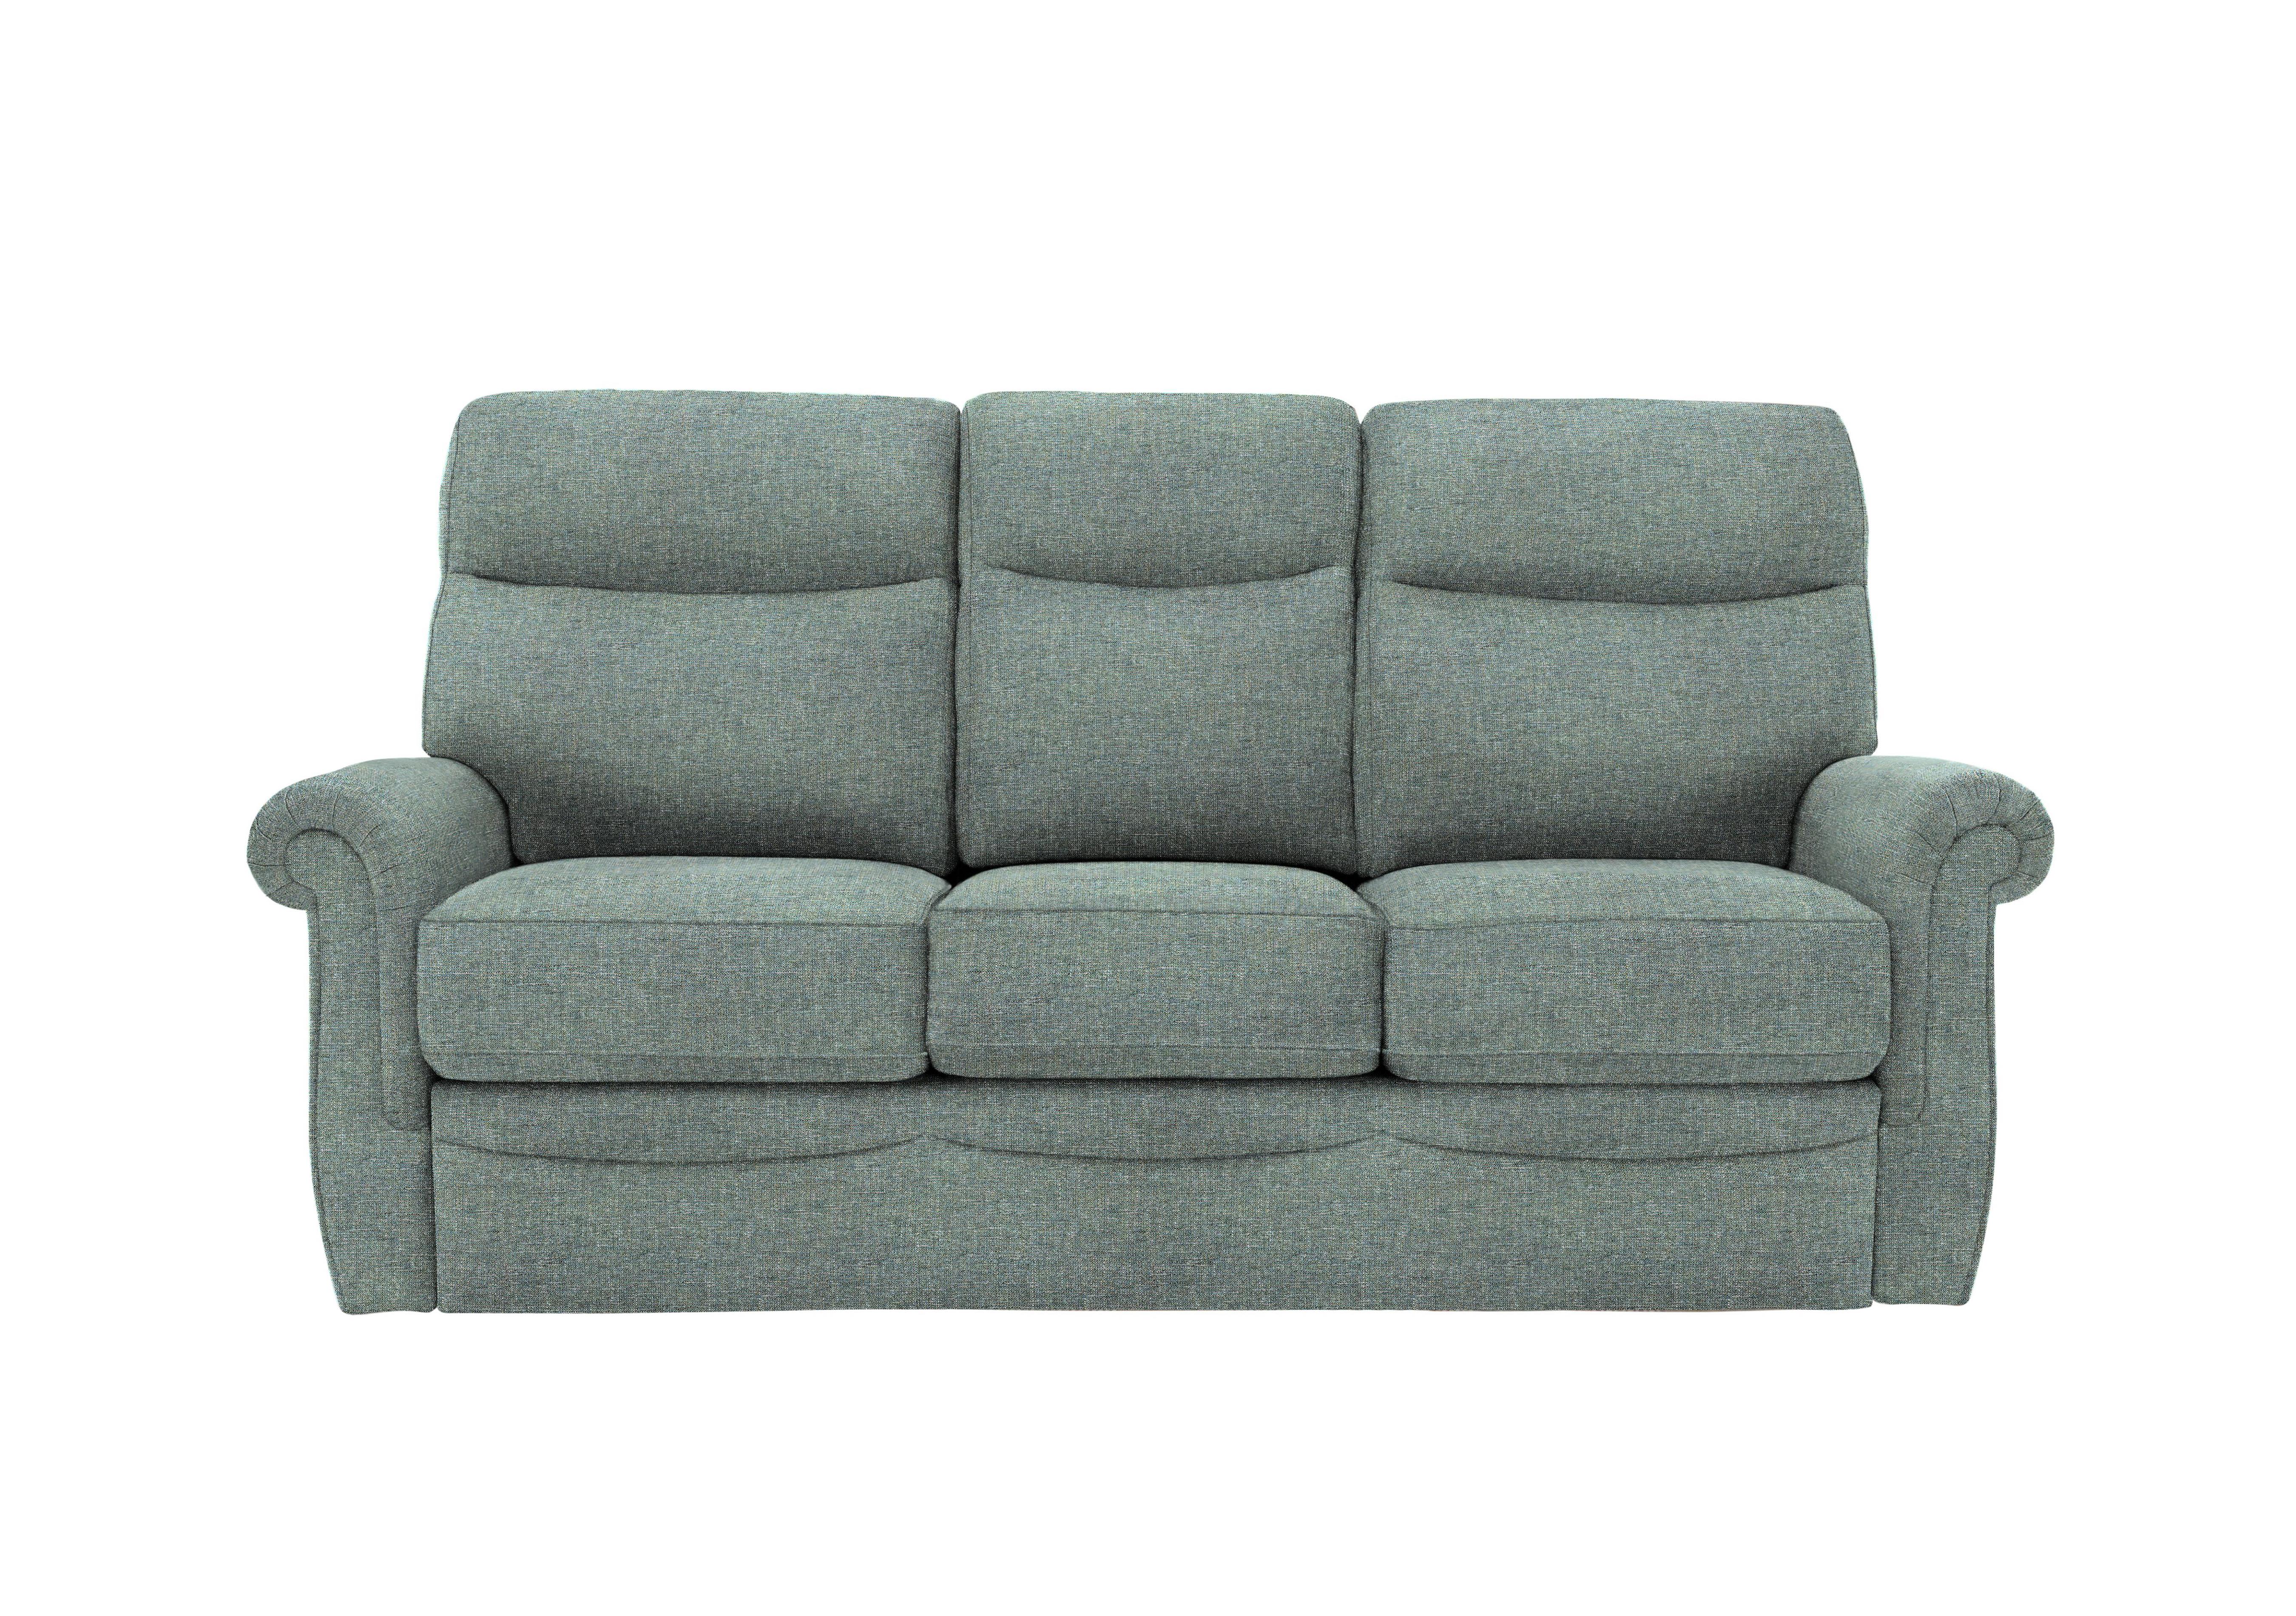 Avon 3 Seater Fabric Sofa in A020 Dapple Kingfisher on Furniture Village